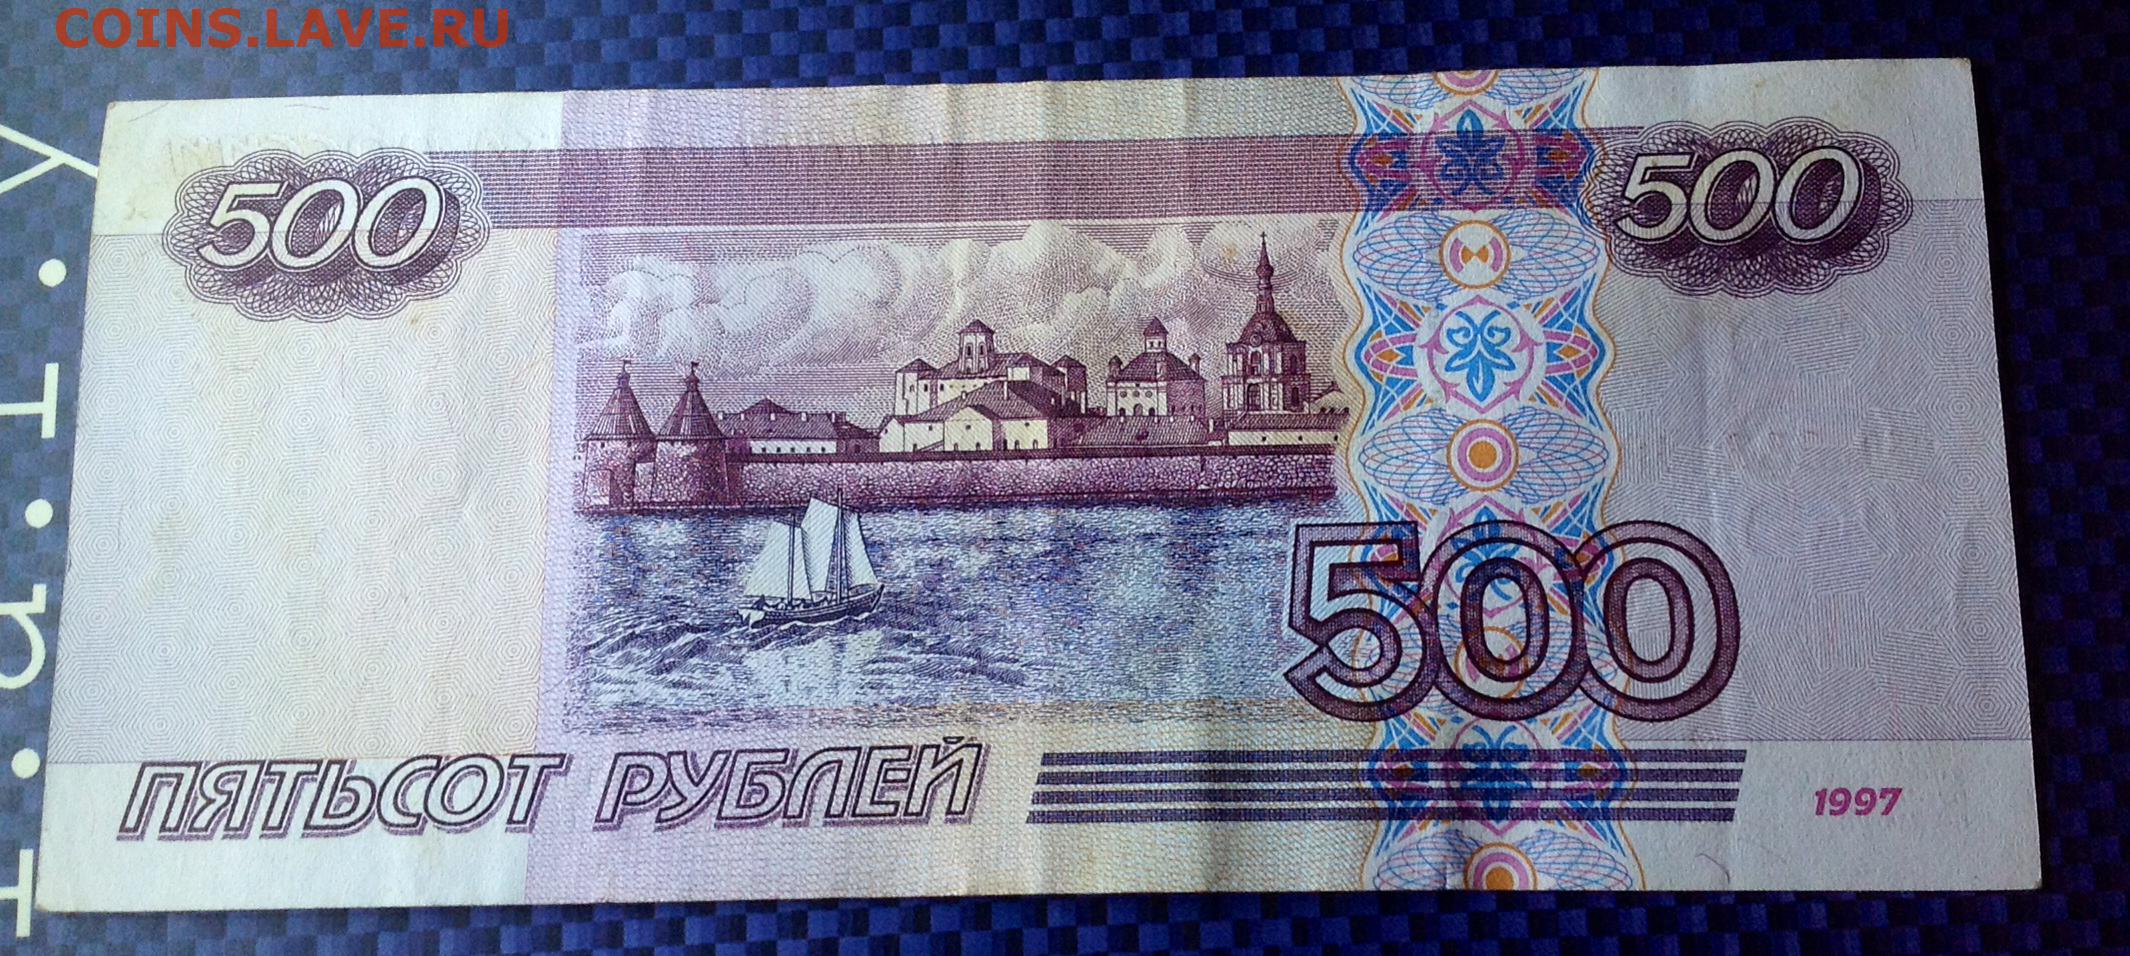 500 рублей 2018. 500 Рублей 1997 модификация 2001. 500 Рублей 1997 года модификация 2001. 500 Рублей 2001 года модификации. 500 Рублей 1997 года бумажные модификация 2001.